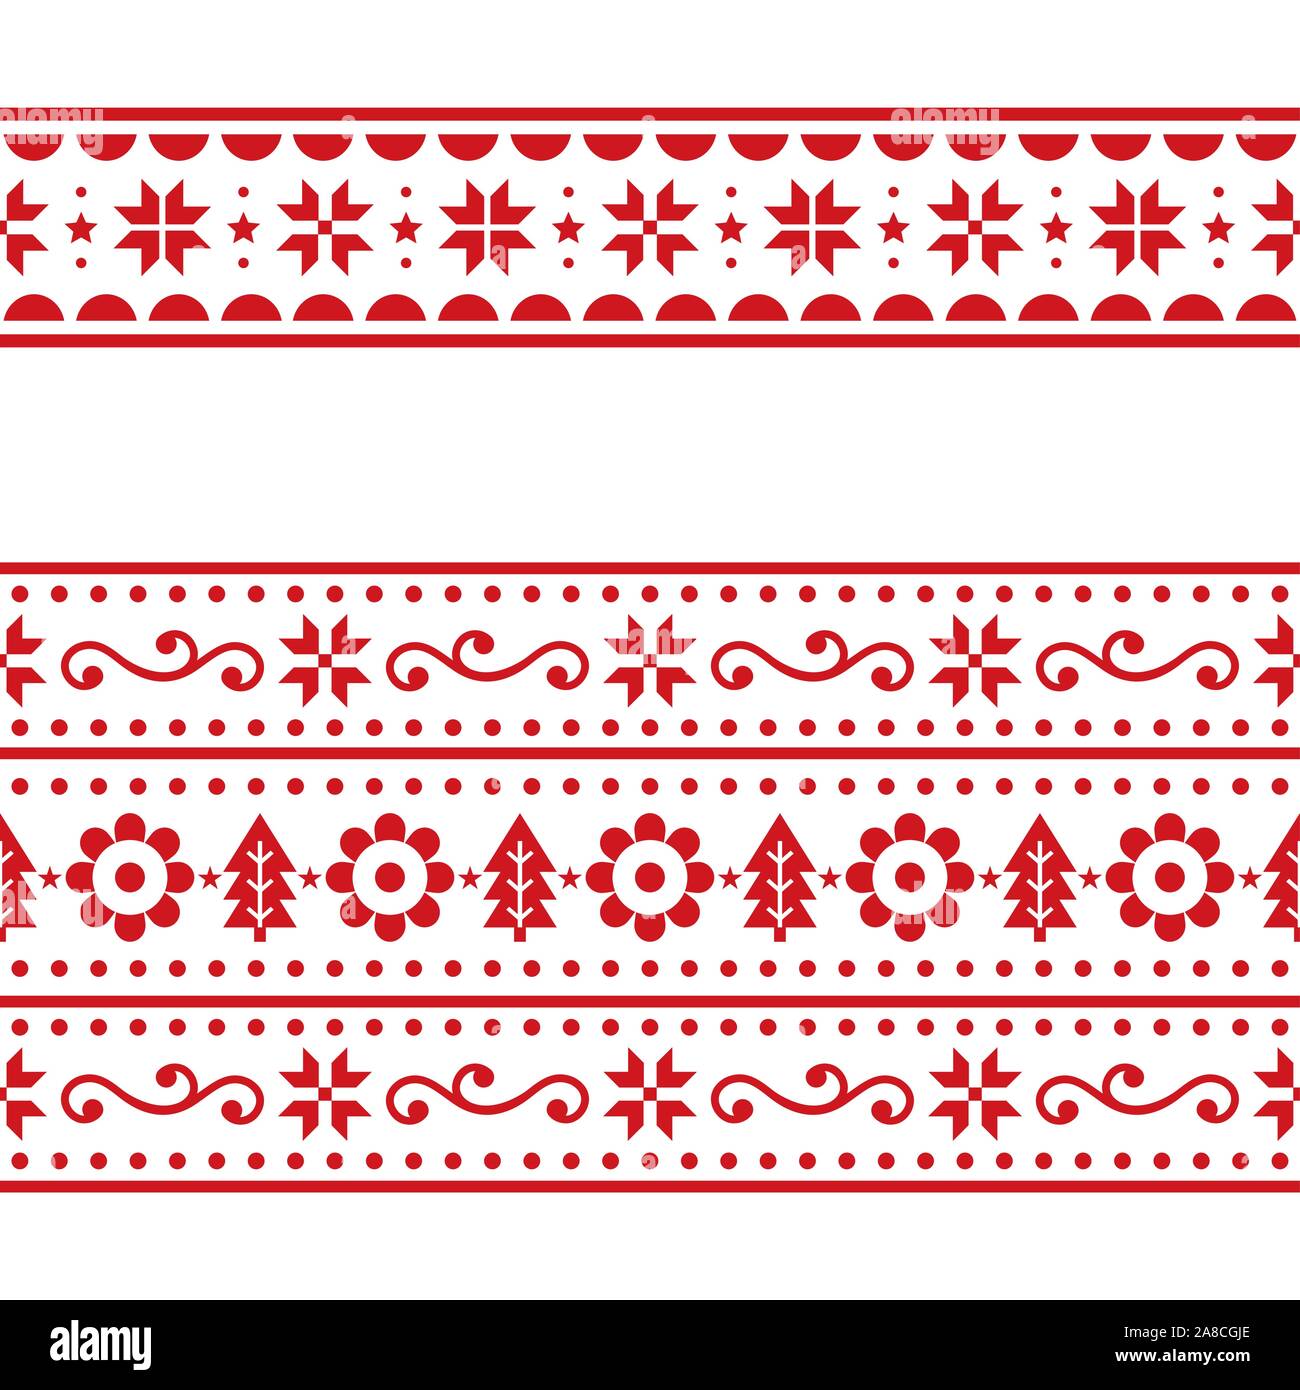 Winter Snowflake Stamp Pattern - Scandinavian Folk Art Christmas ornament  Art Print by Patterns Journey